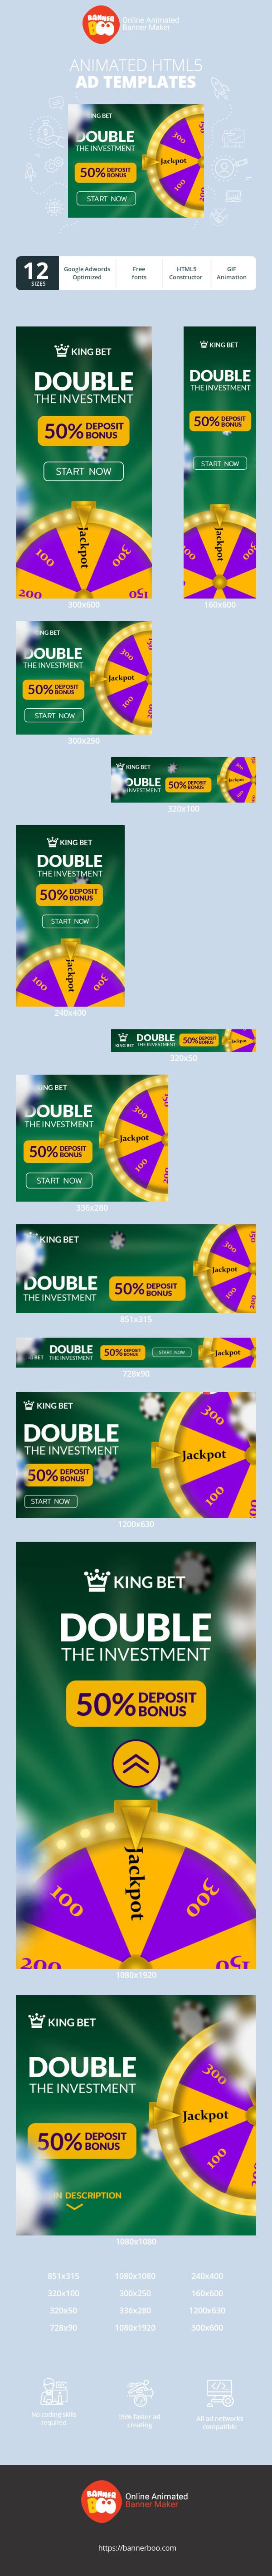 Banner ad template — Double The Investment — 50% Deposit Bonus